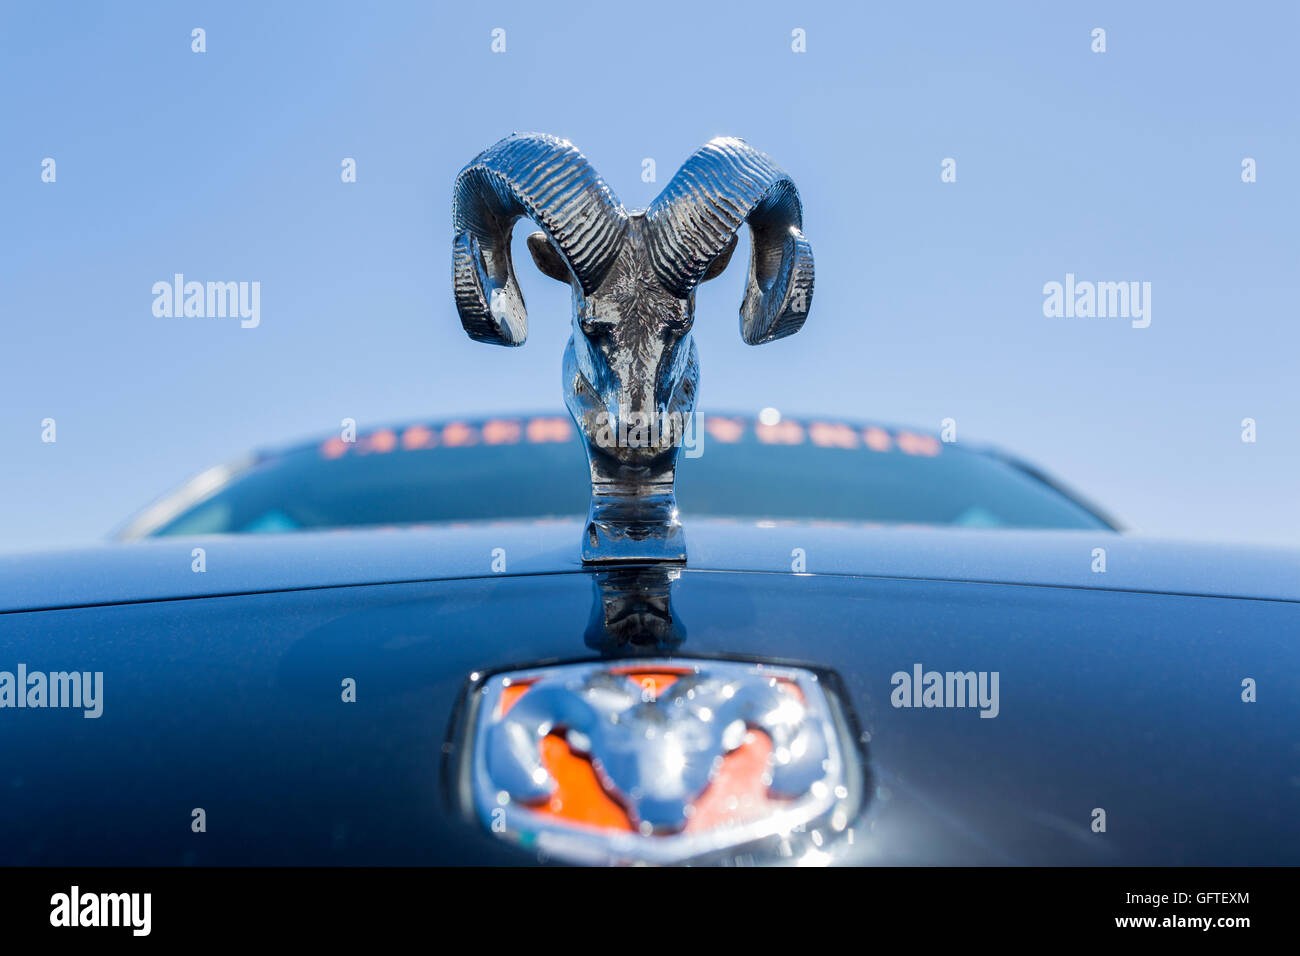 Dodge Ram head badge on bonnet of a car Stock Photo - Alamy